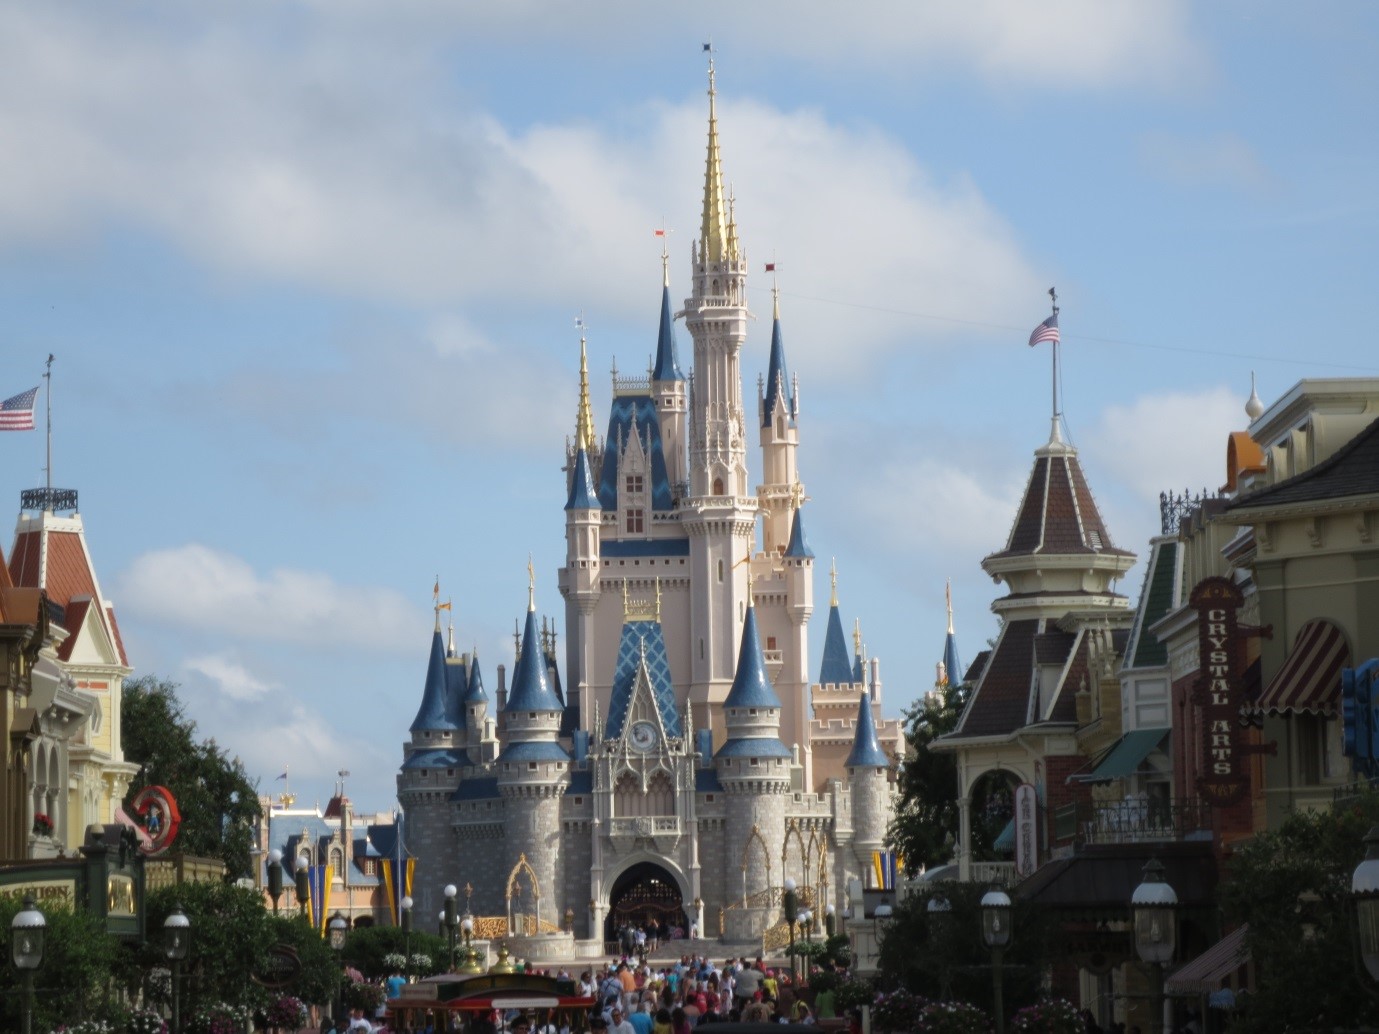 Disney Castle at Magic Kingdom, Disney World, Orlando, Florida